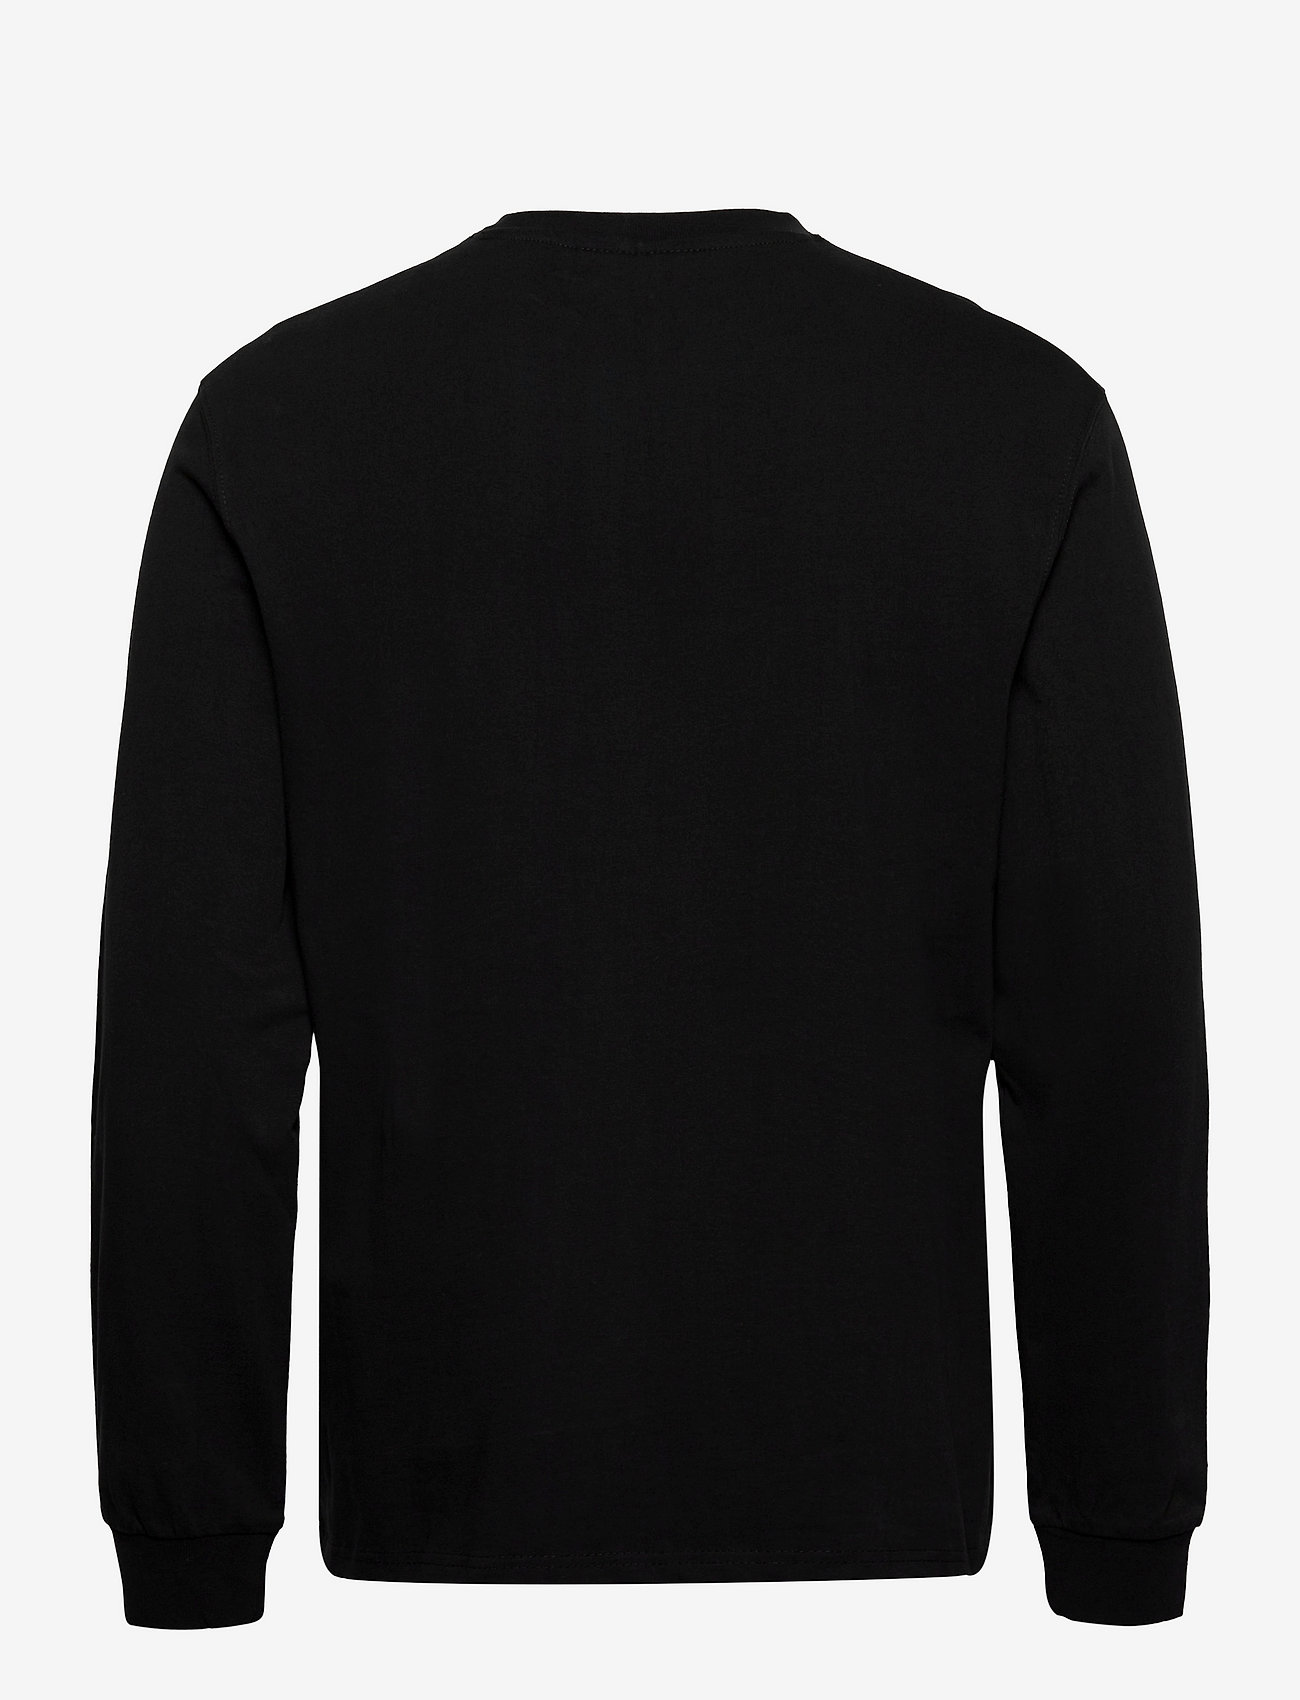 HAN Kjøbenhavn - Casual Tee Long Sleeve - basic shirts - black logo - 1